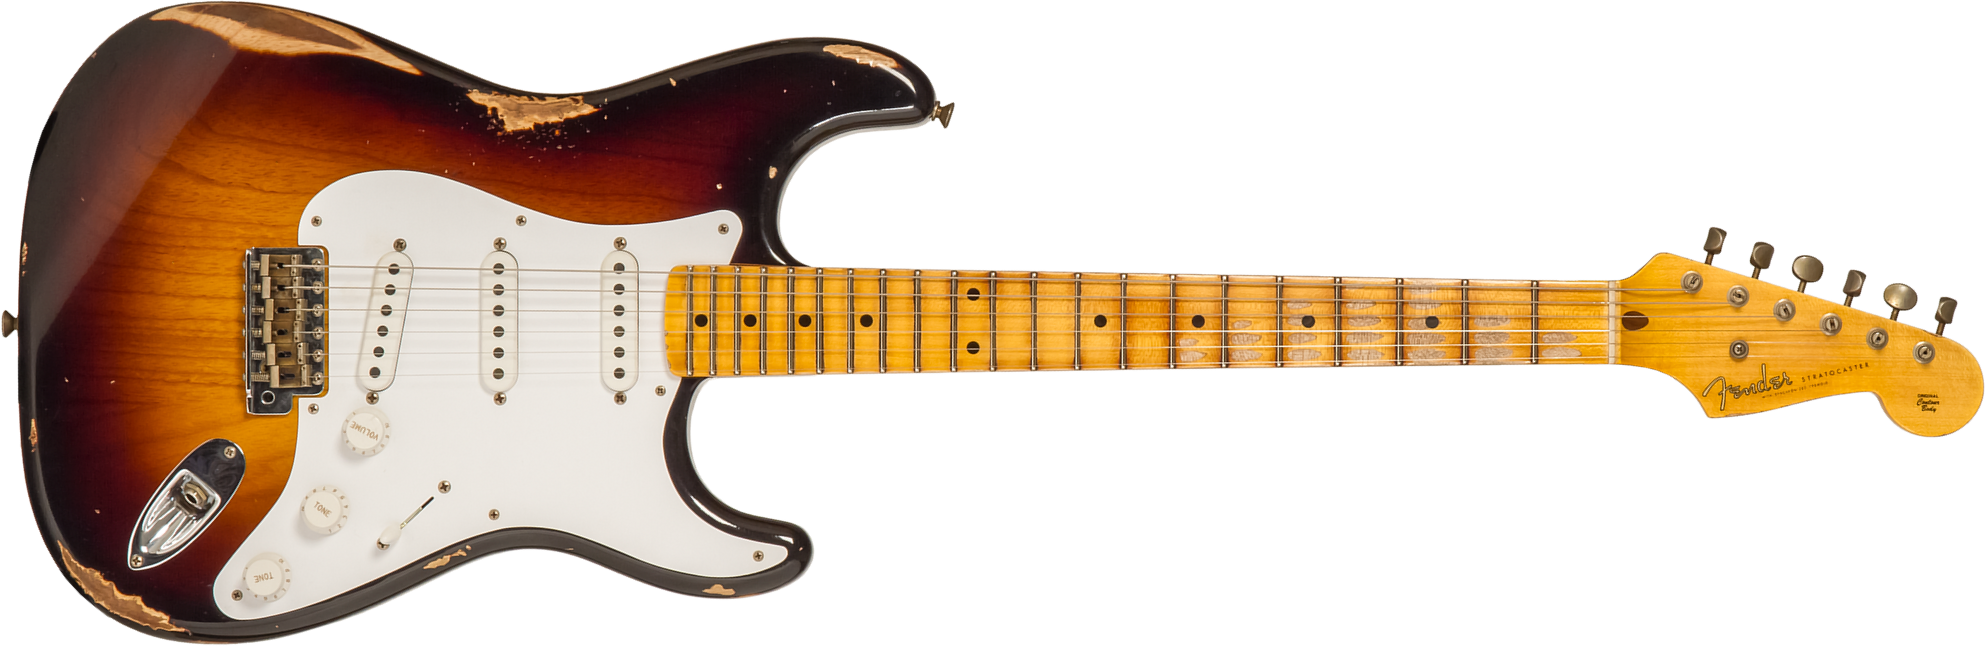 Fender Custom Shop Strat 1954 70th Anniv. 3s Trem Mn #xn4316 - Relic Wide Fade 2-color Sunburst - Elektrische gitaar in Str-vorm - Main picture